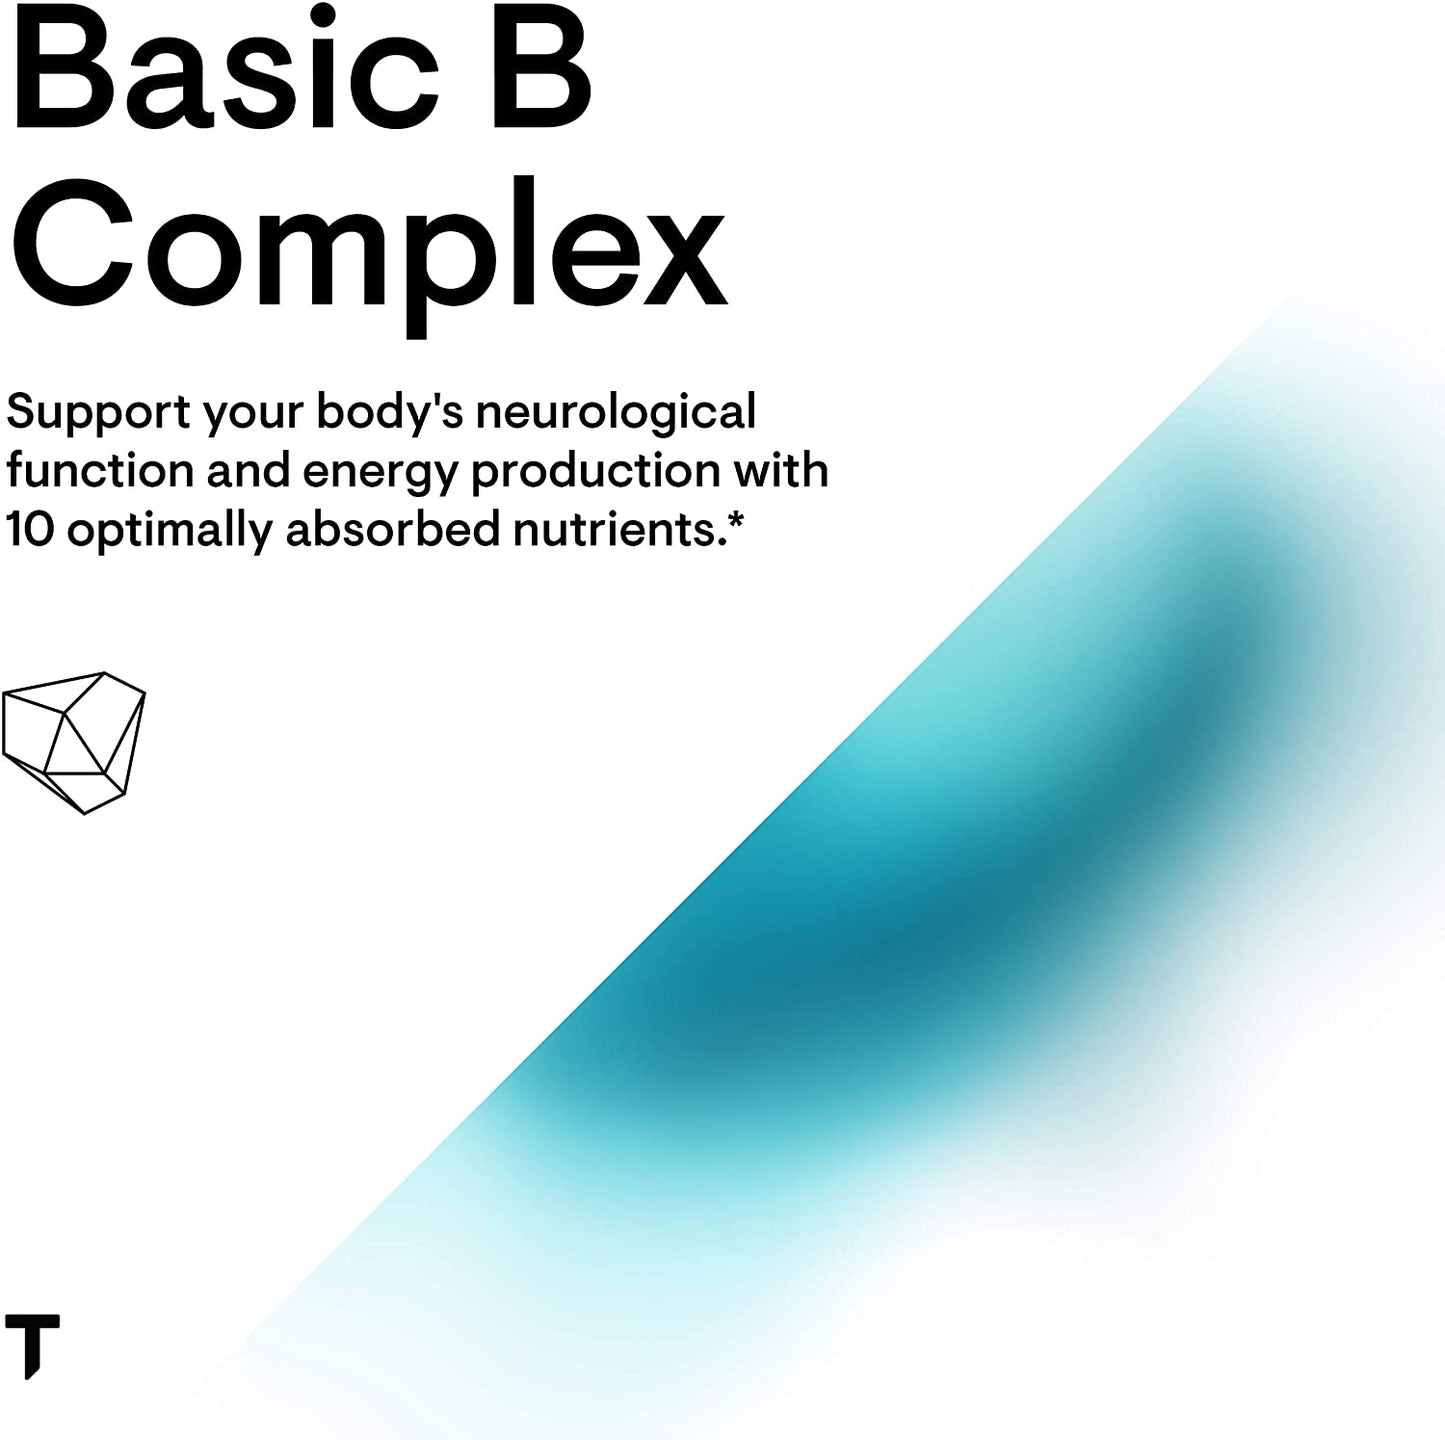 Basic B Complex